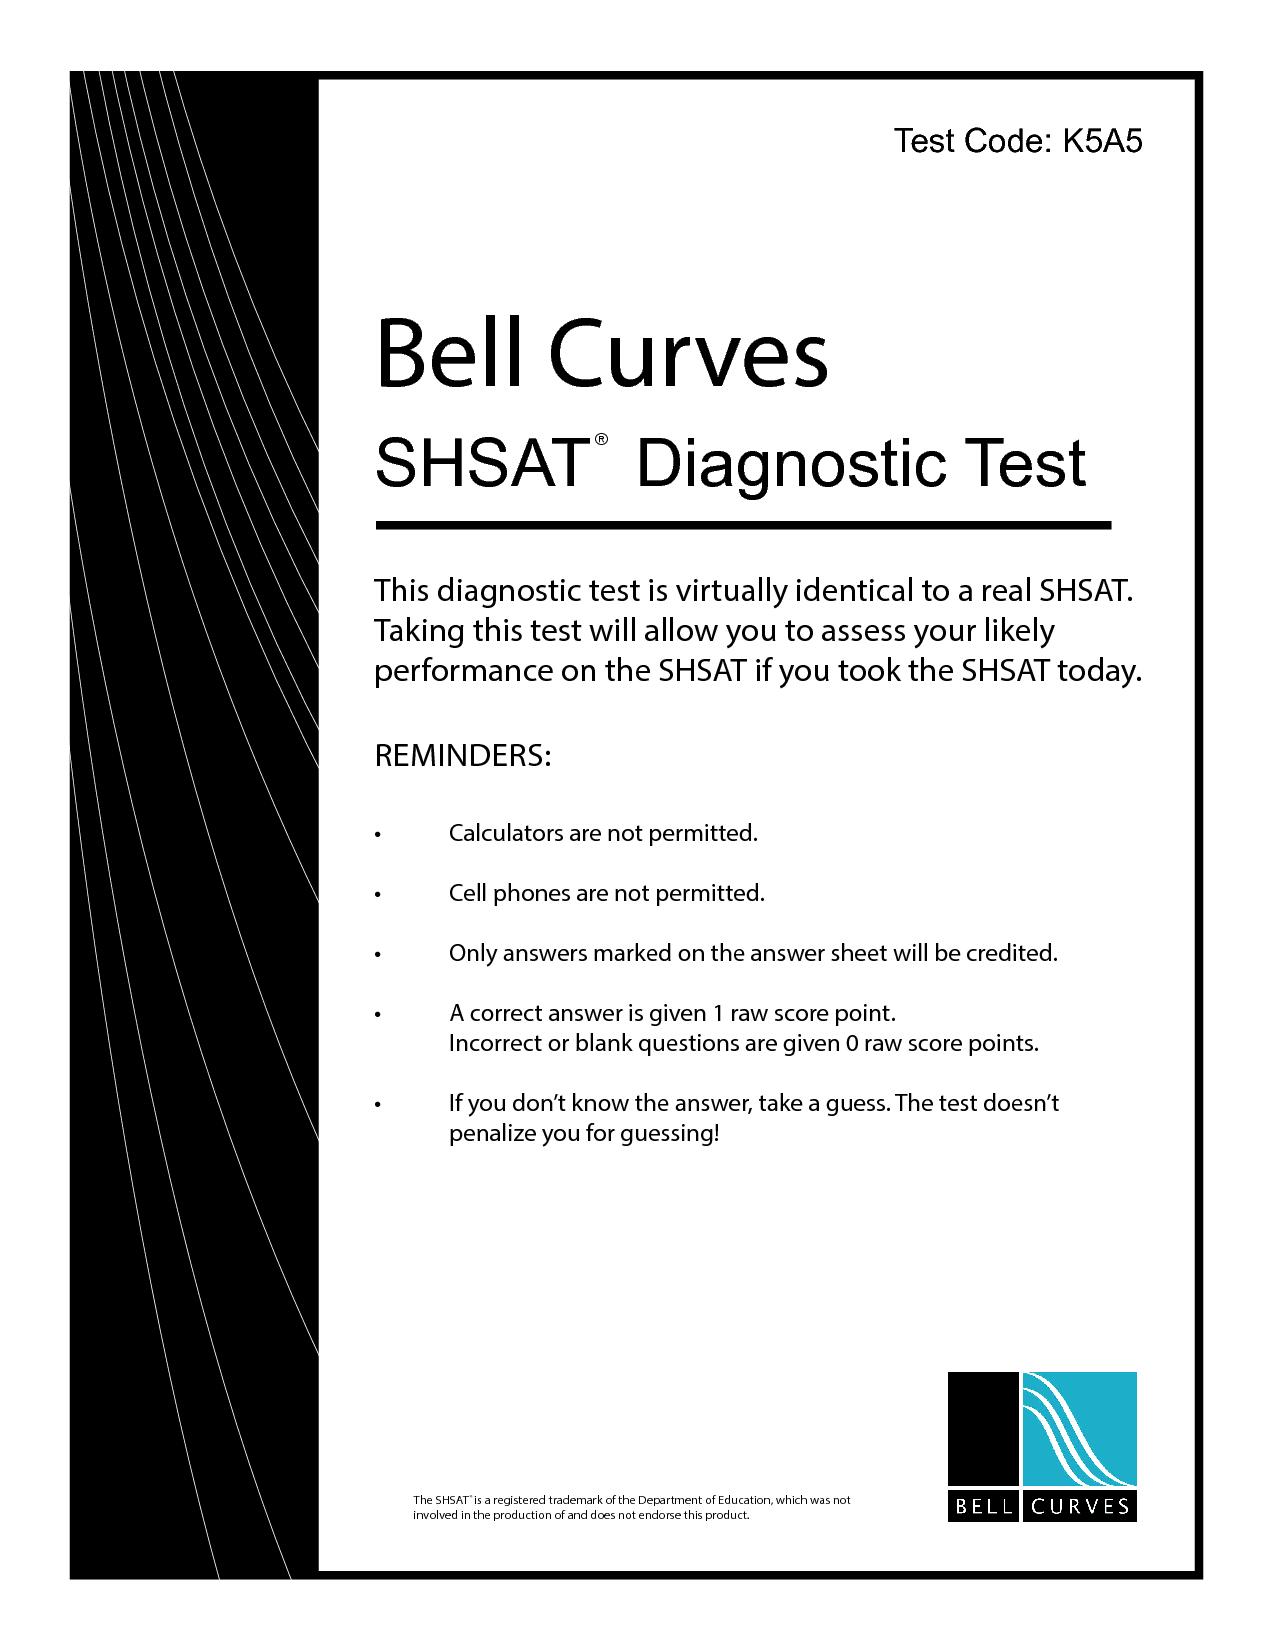 Bell Curves SHSAT Diagnostic K5A5